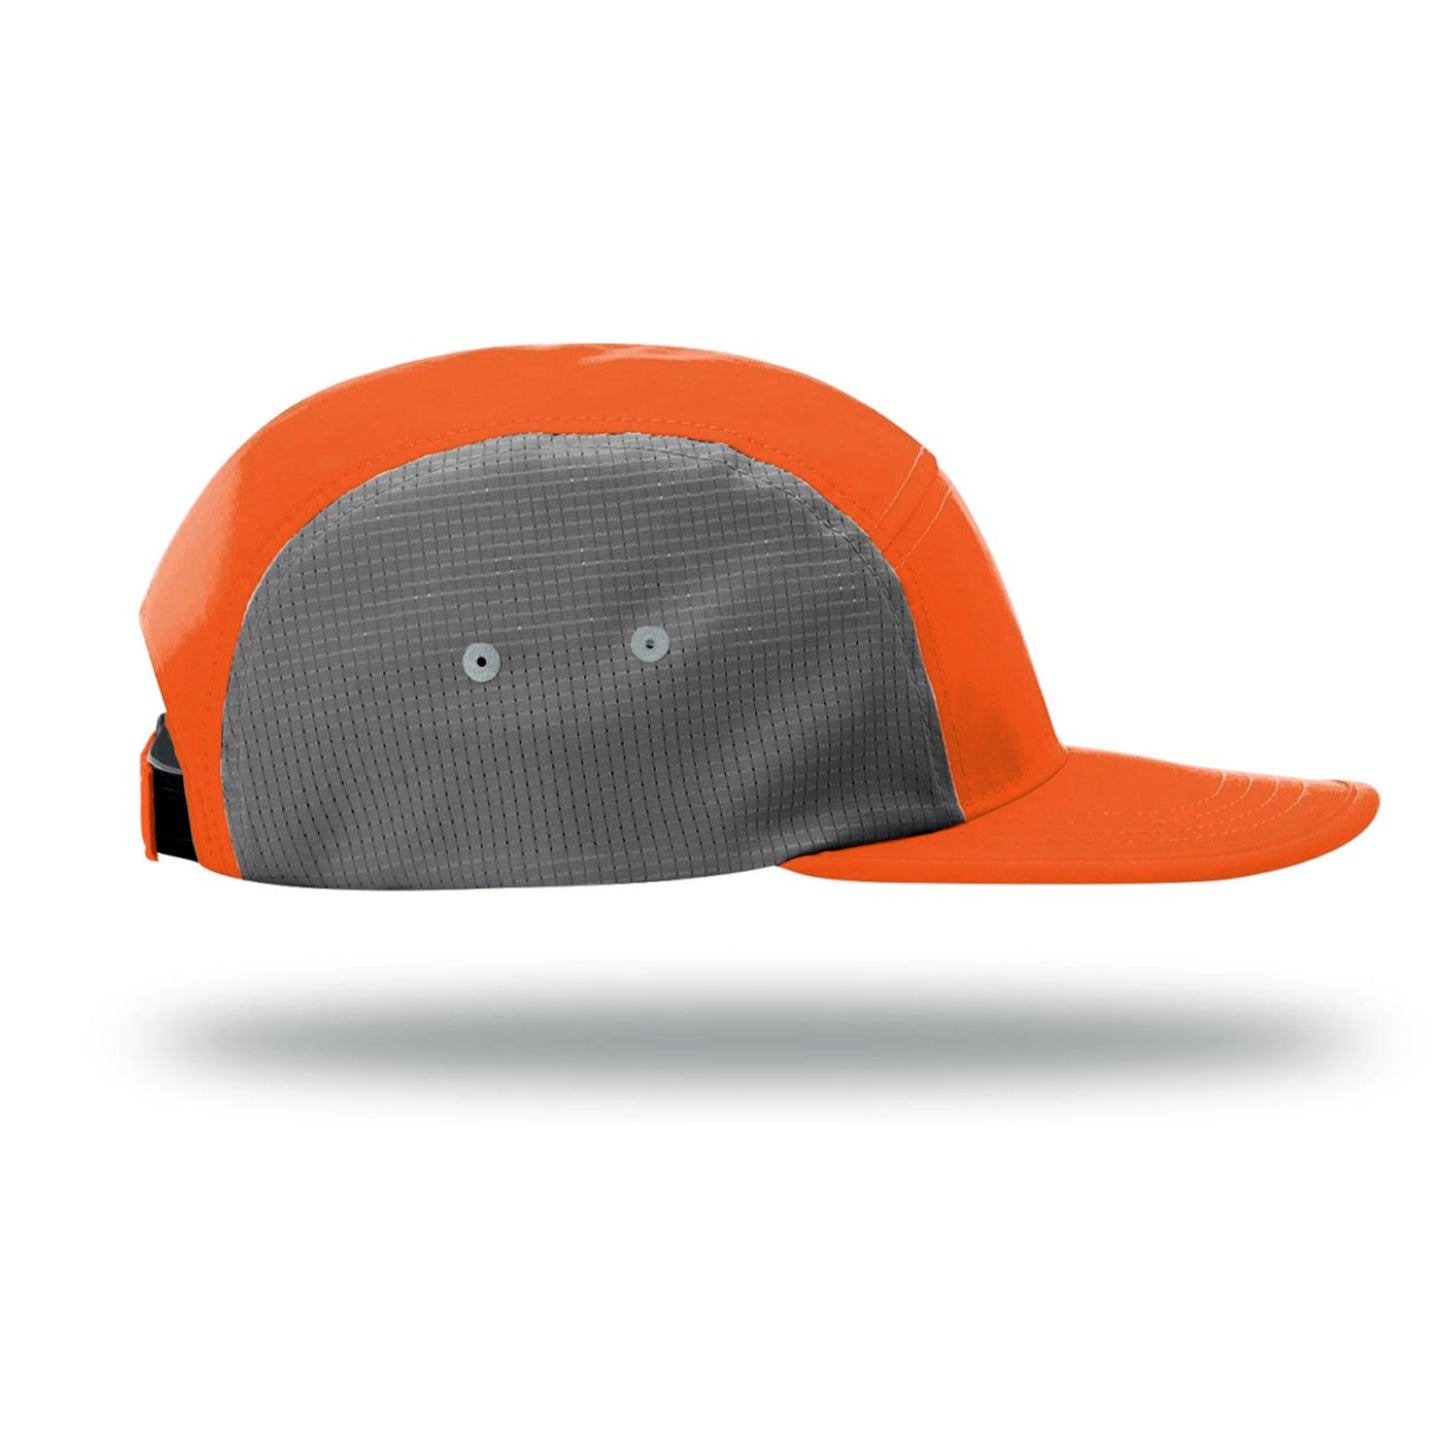 The Shelta Adventurer Cap In Orange side